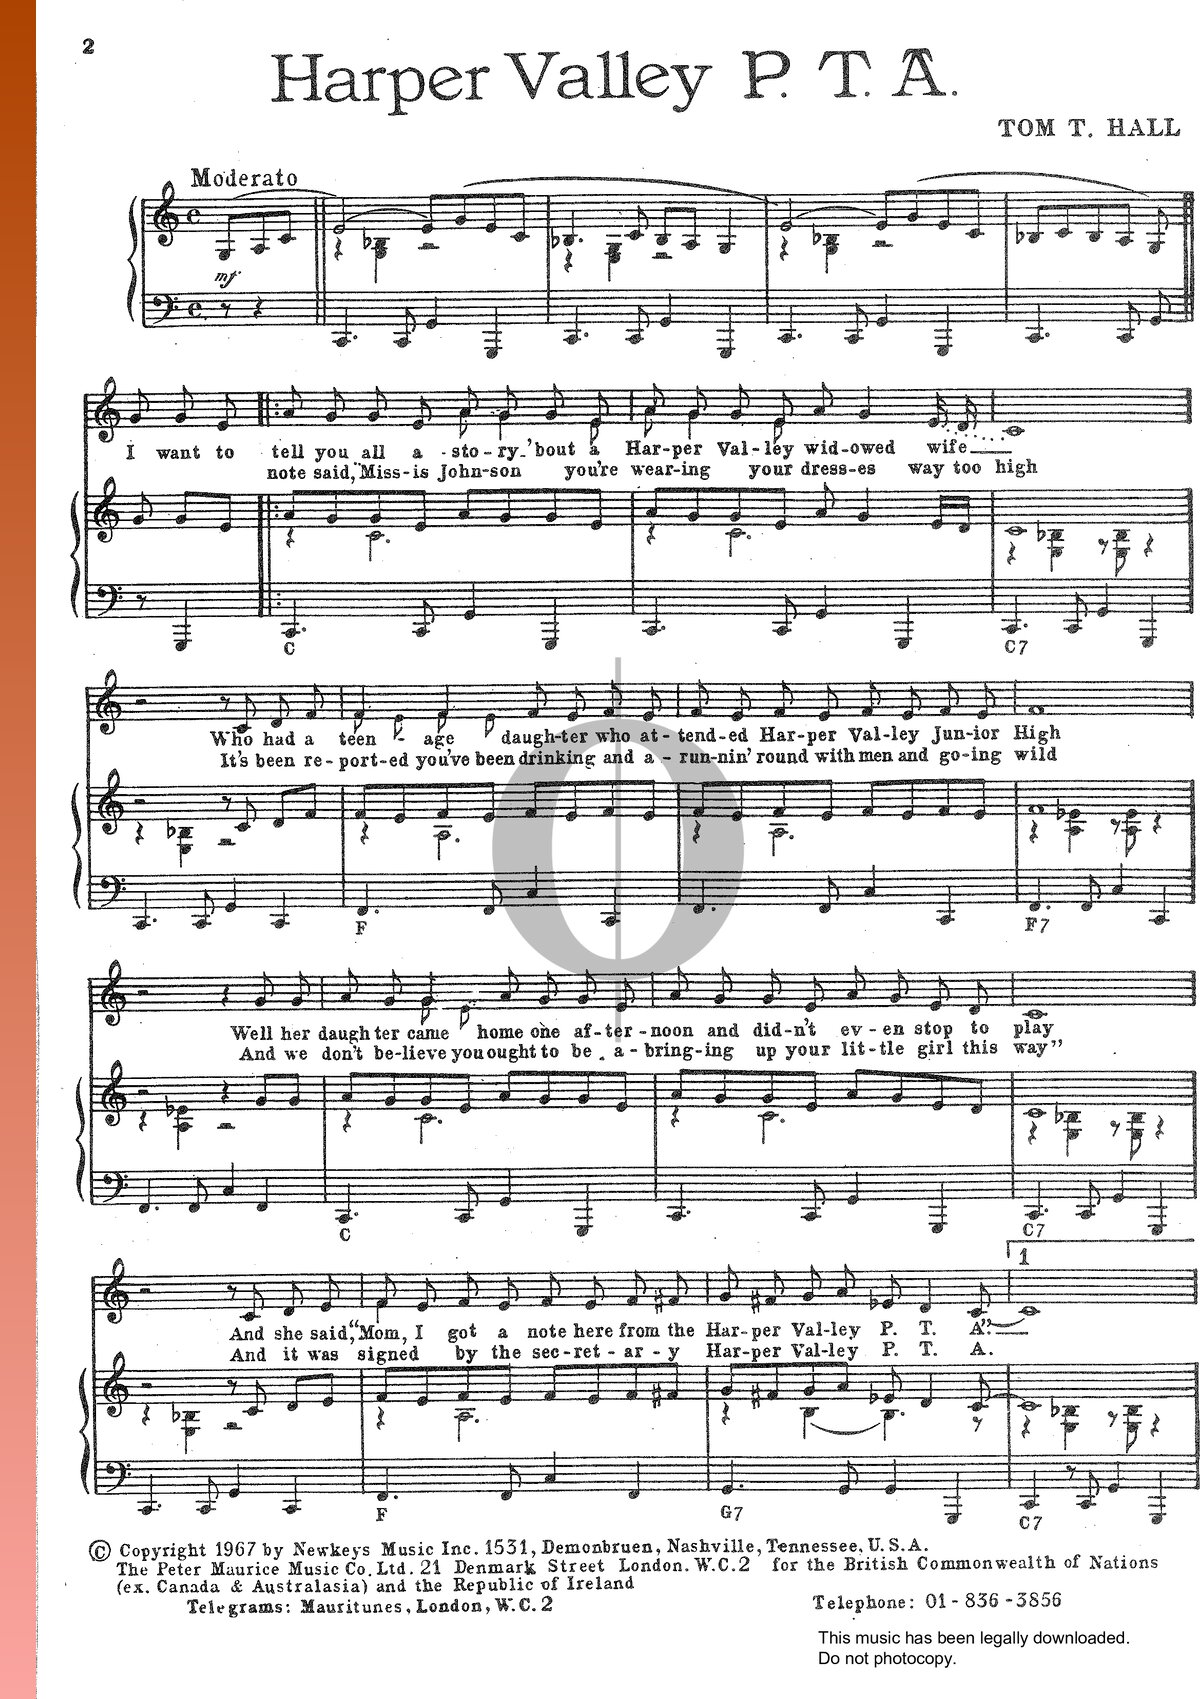 Harper Valley P.T.A. Sheet Music (Piano, Voice) - OKTAV